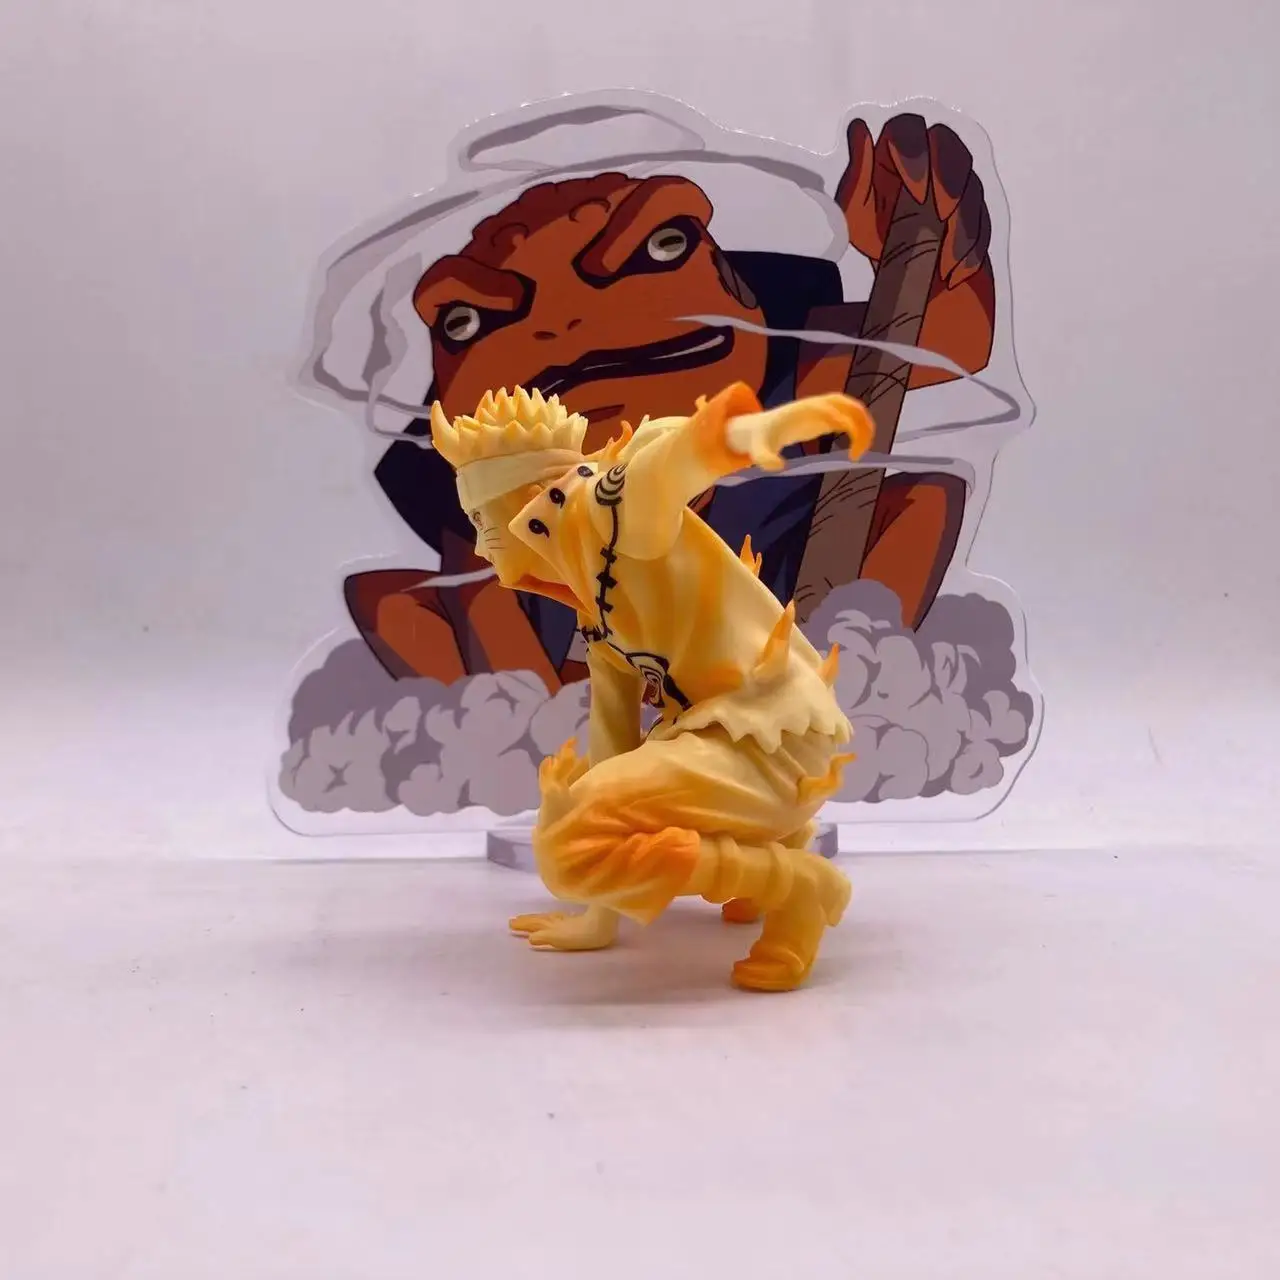 Panel Asli Tontonan Naruto Action Figure Model Mainan Anime Figuralscar Konsol Tengah Ornamen Mainan Stand Kartu Kodok - 5